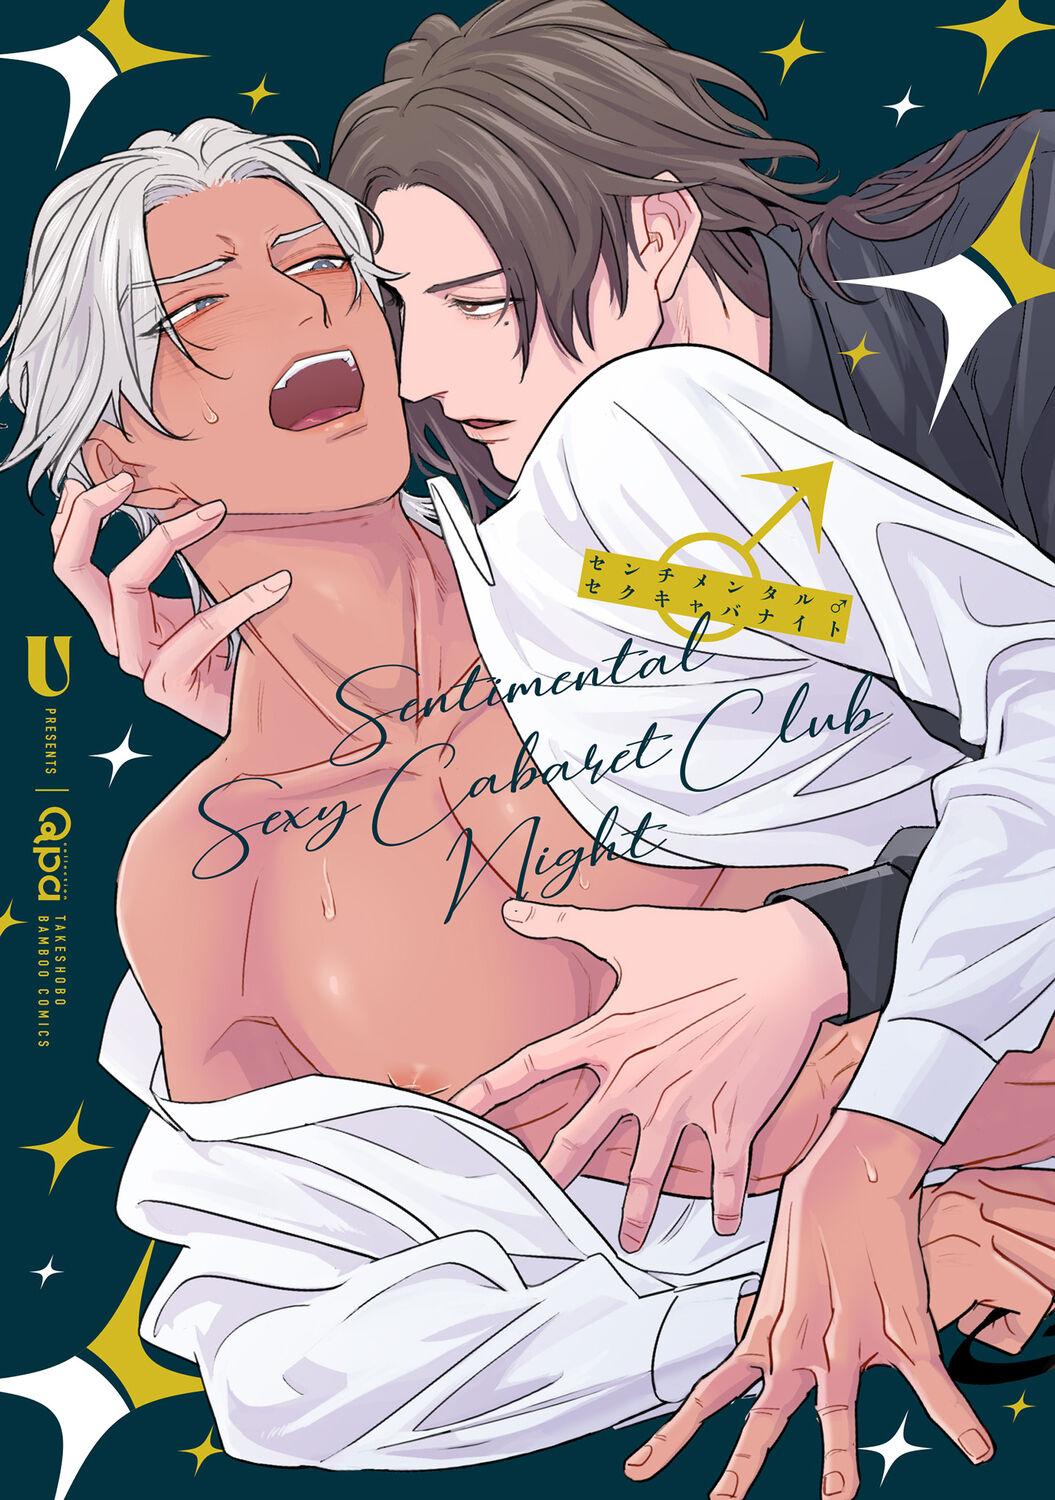 Sentimental SexCaba Night | 意乱情迷♂风俗店之夜 Ch. 1-2 0